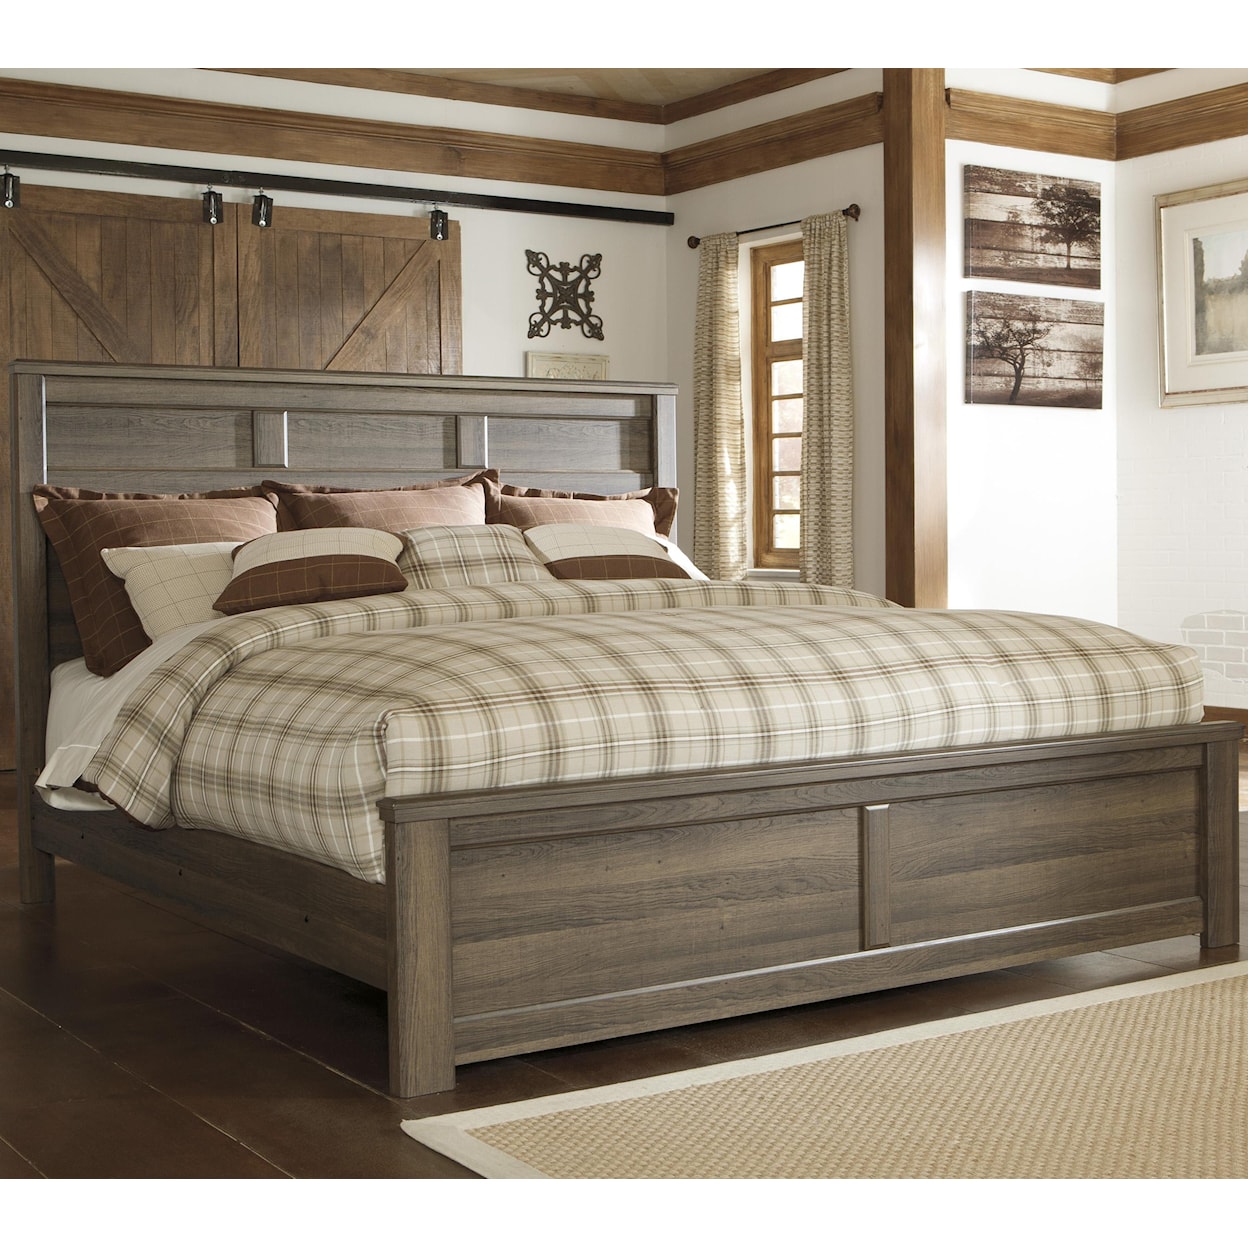 Ashley Furniture Signature Design Juararo King Panel Bed